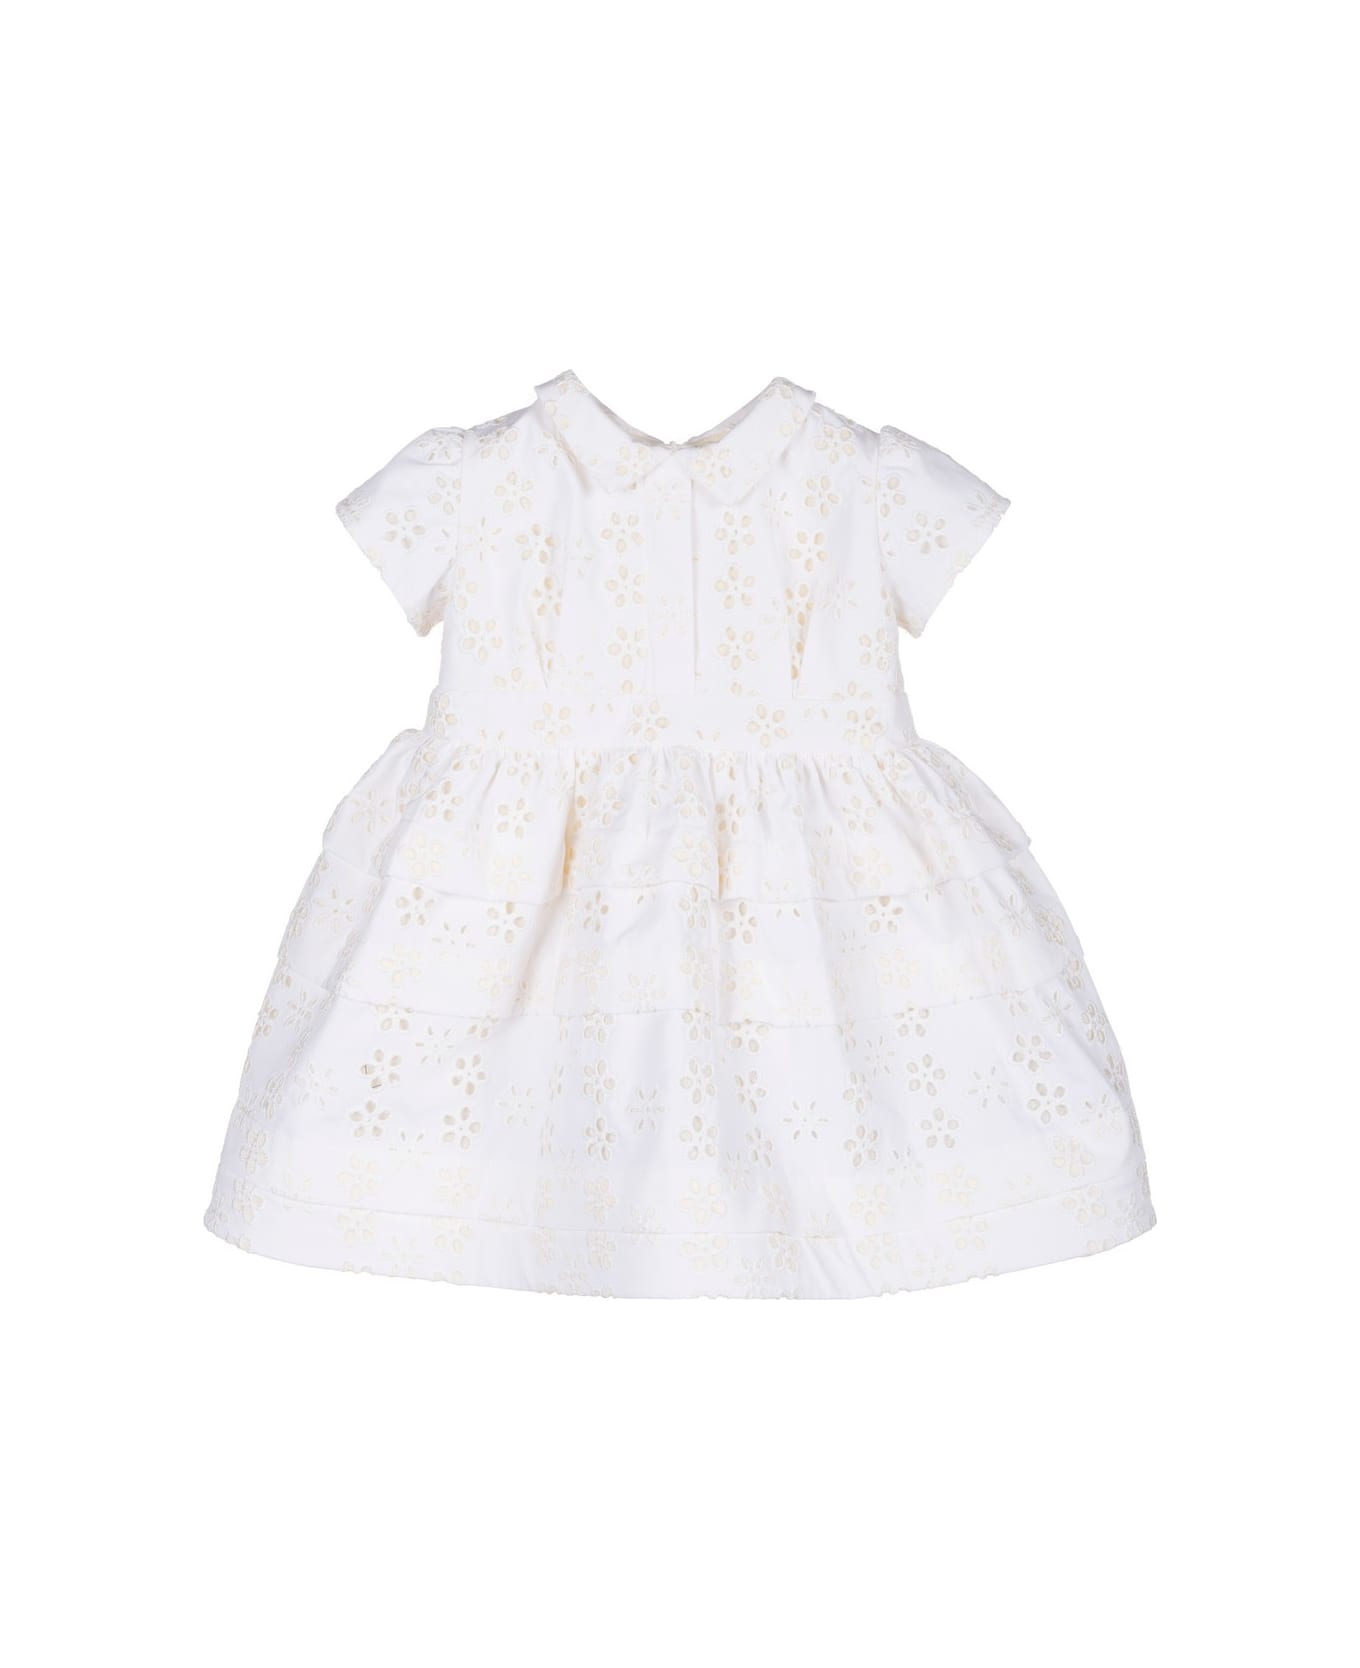 MiMiSol Embroidered Dress - White